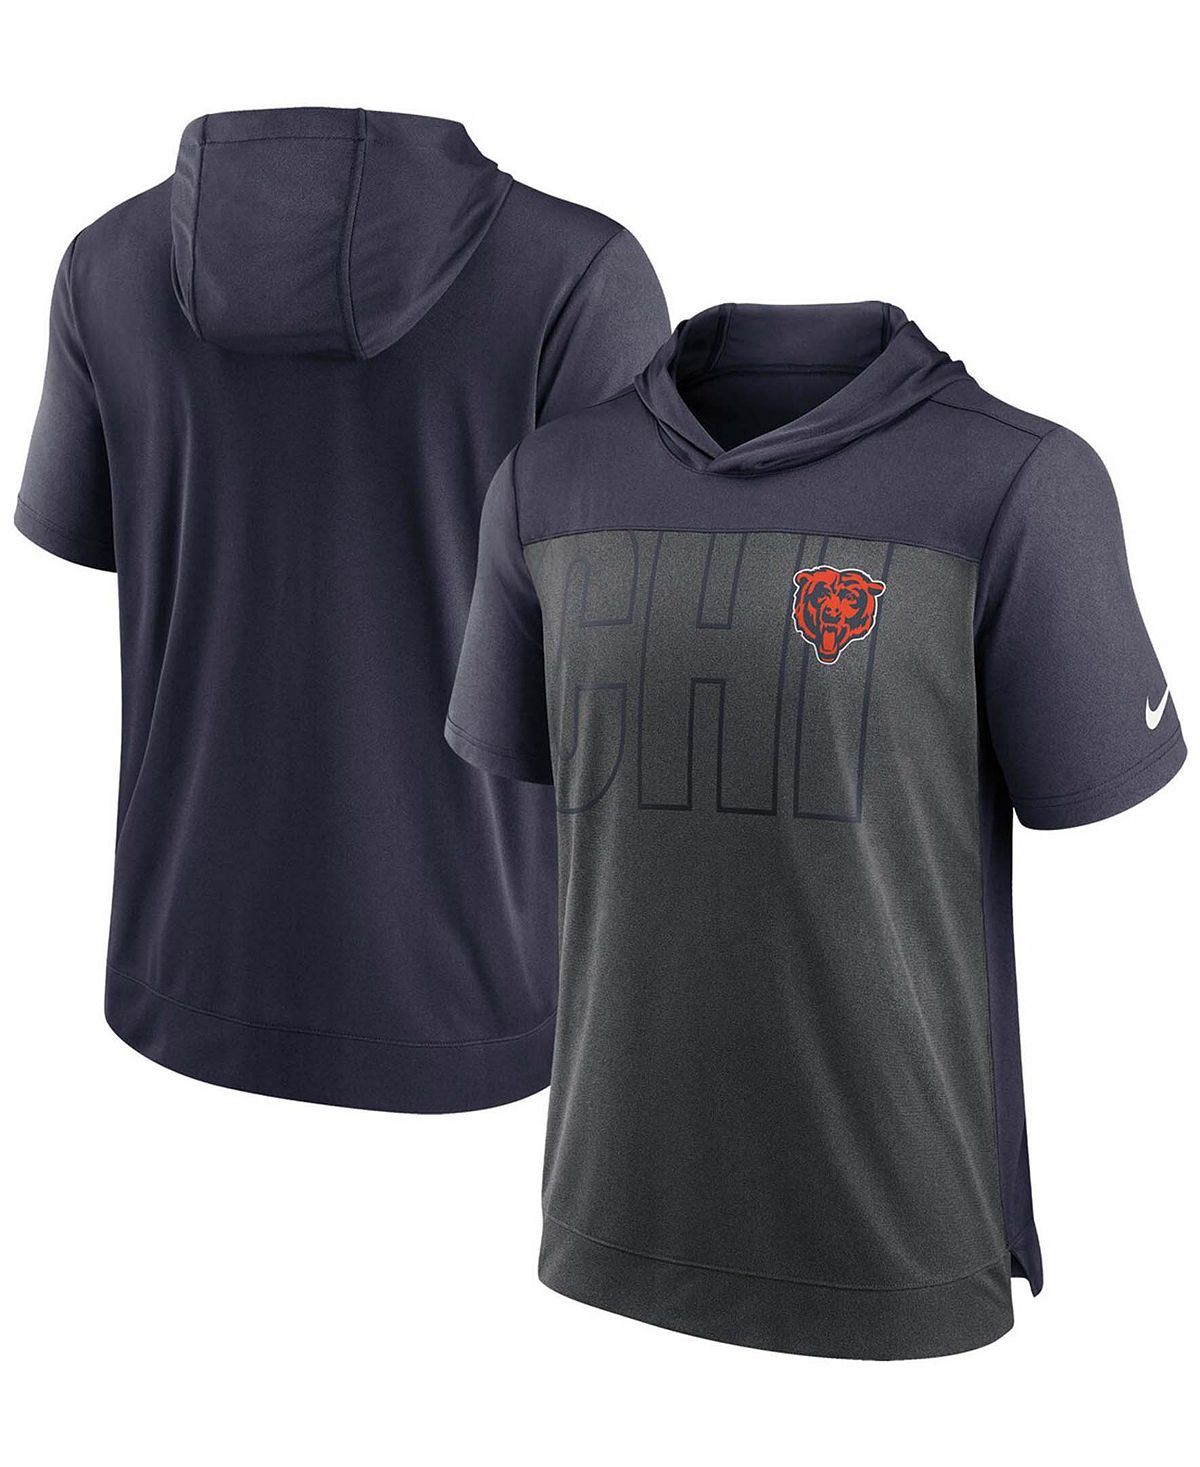 

Мужская футболка с капюшоном цвета «Хезер» темно-синего цвета Chicago Bears Performance Nike, Синий